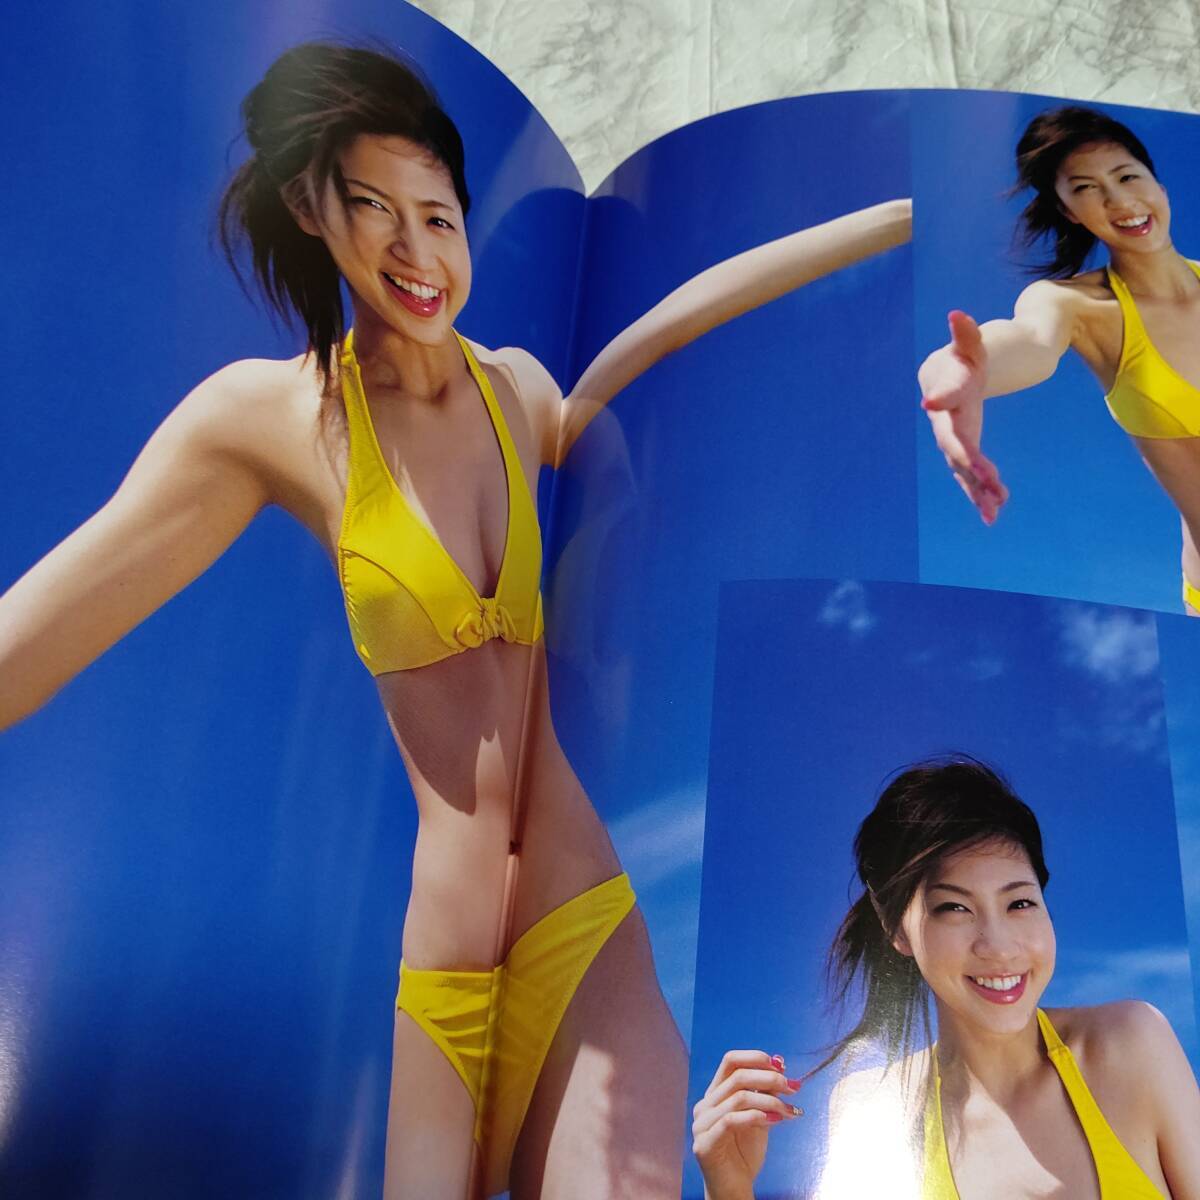  photoalbum Yasuda Misako photoalbum ........ prompt decision free shipping bikini model swimsuit bikini underwear 